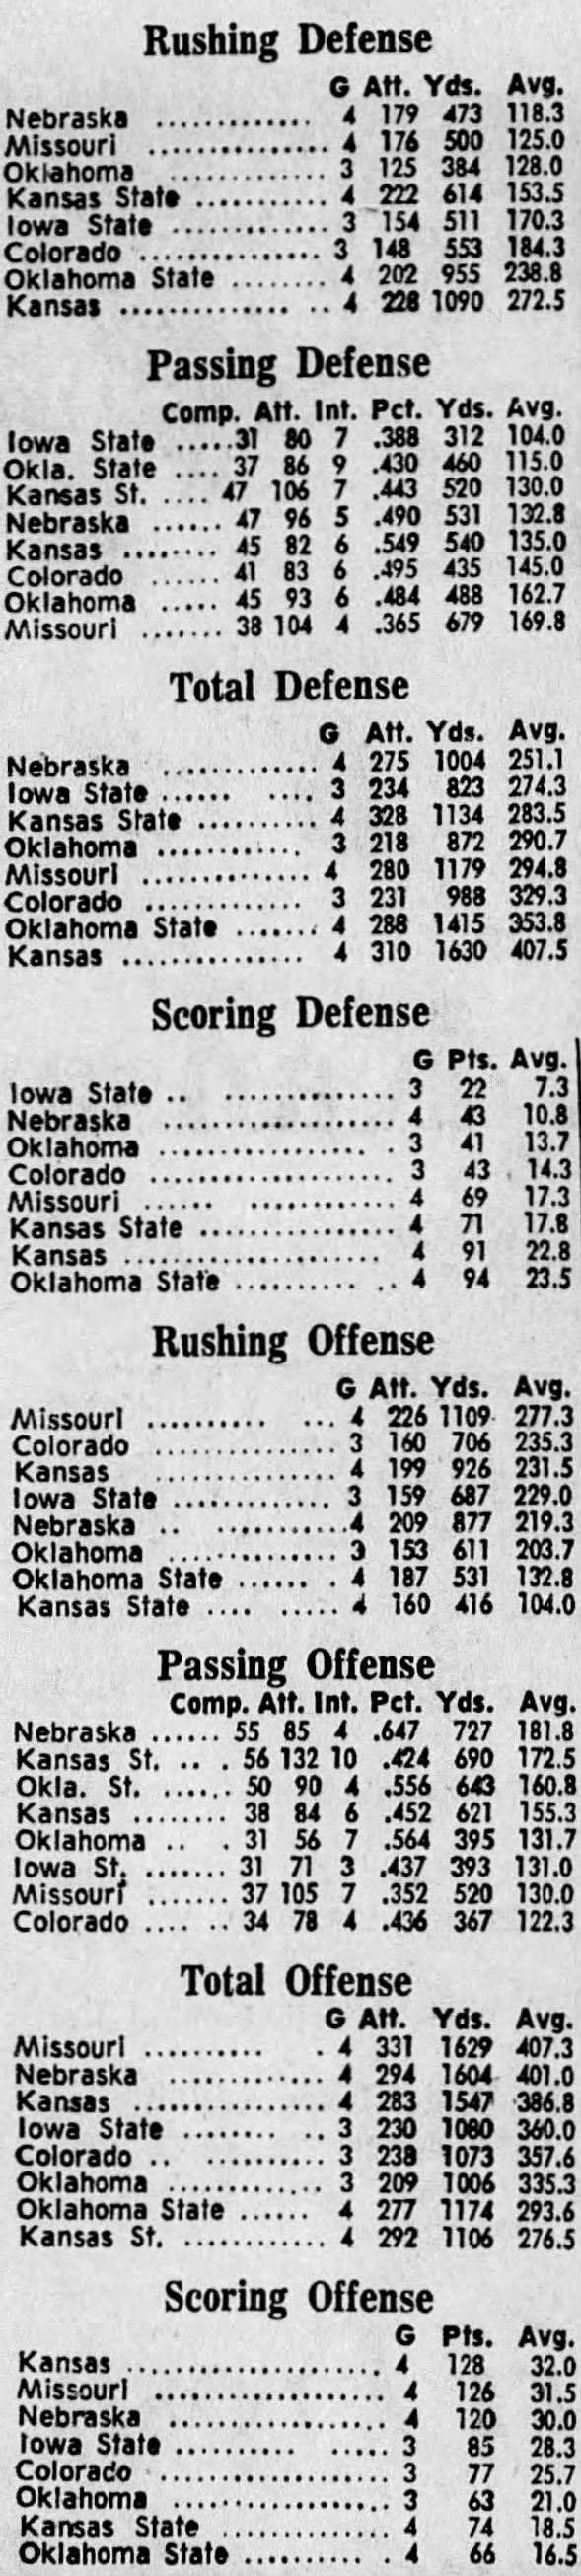 1970 Big Eight team stats, 4 games